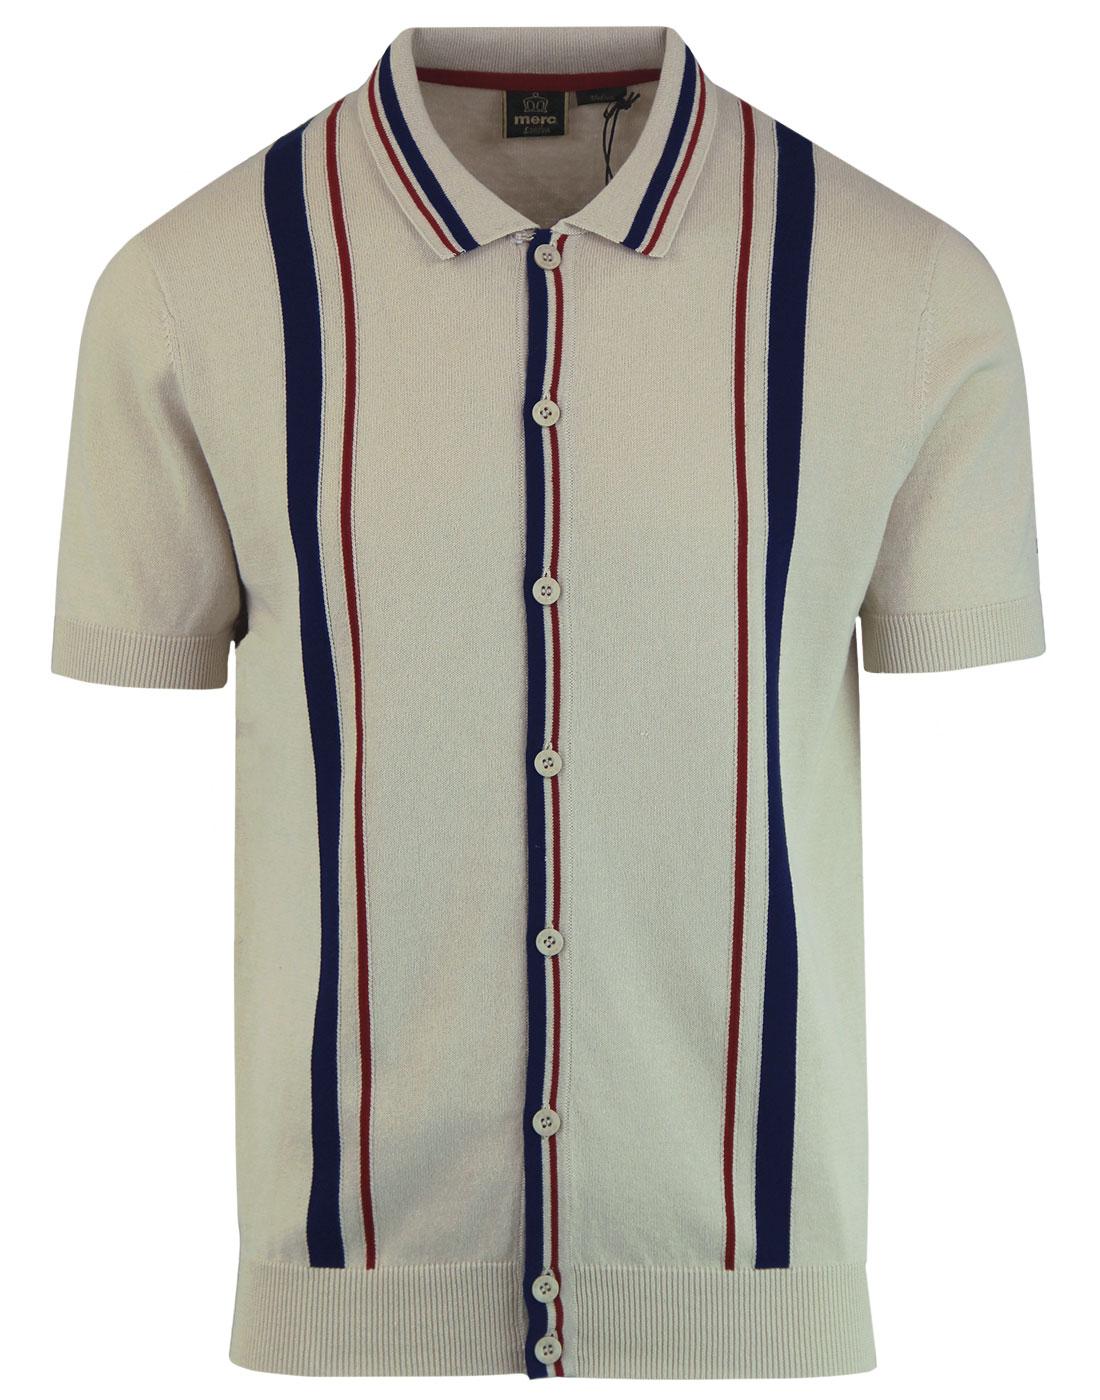 MERC Pilot Retro 1960s Mod Vertical Stripe Knitted Polo Shirt